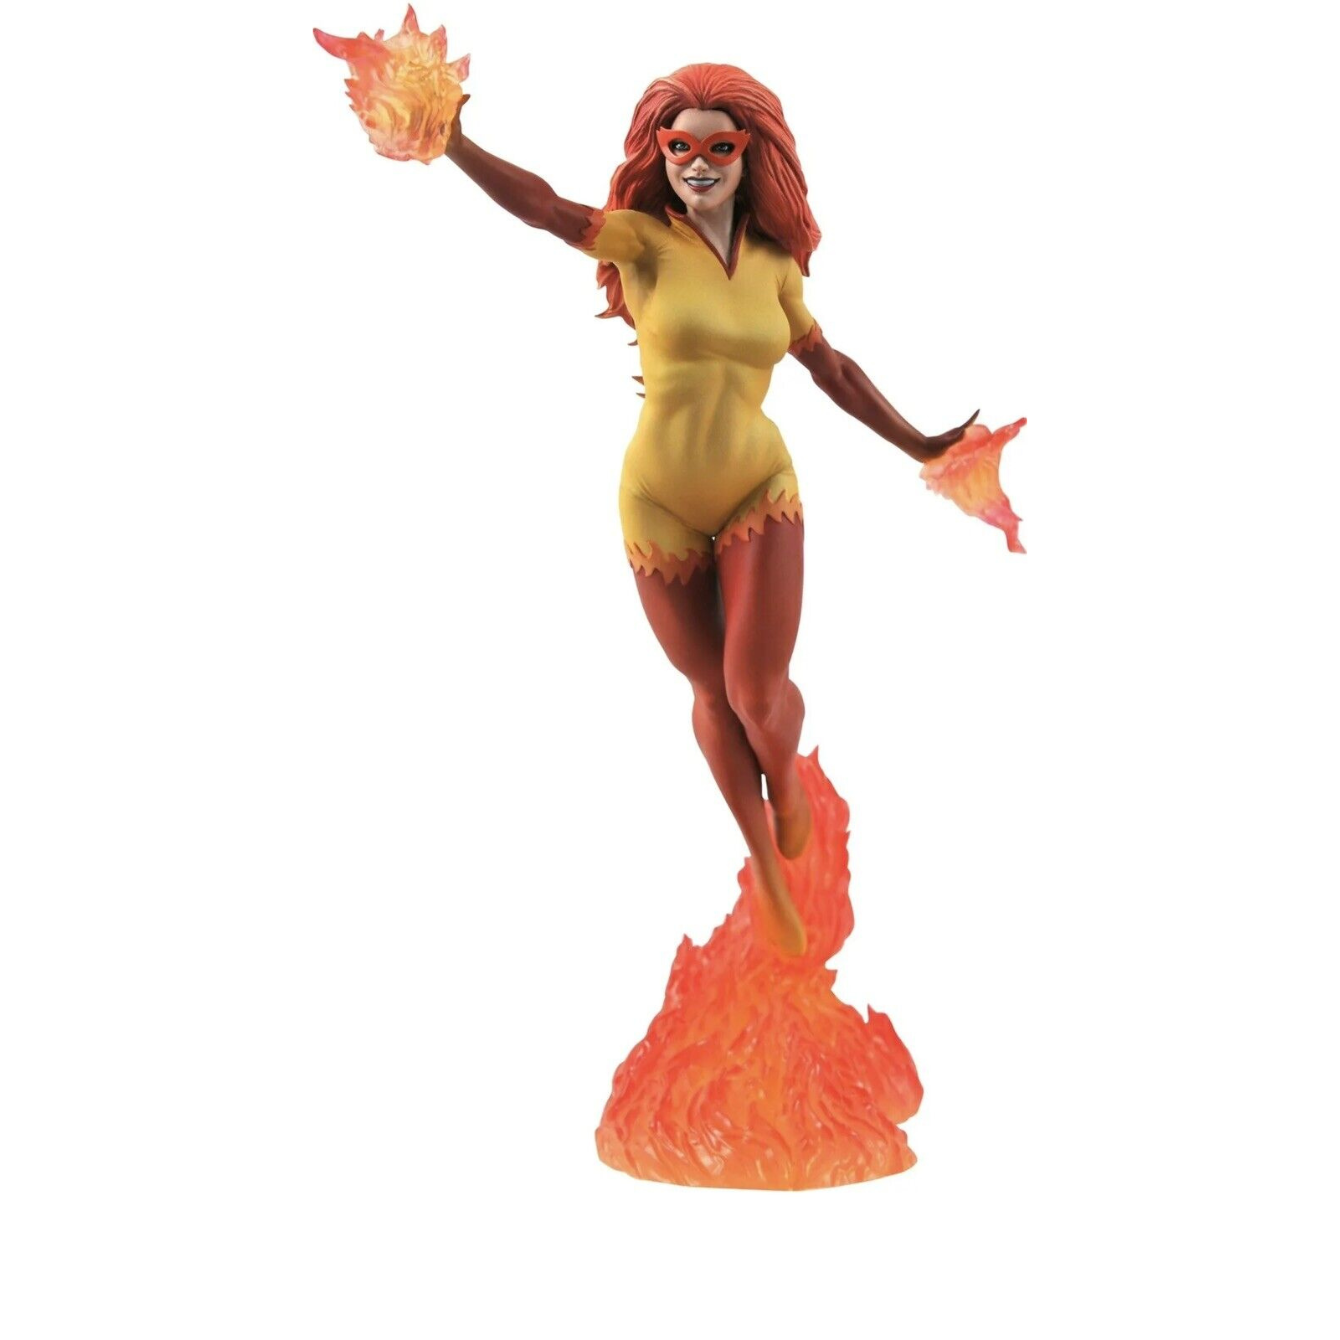 Gallery Comics Firestar PVC Statue